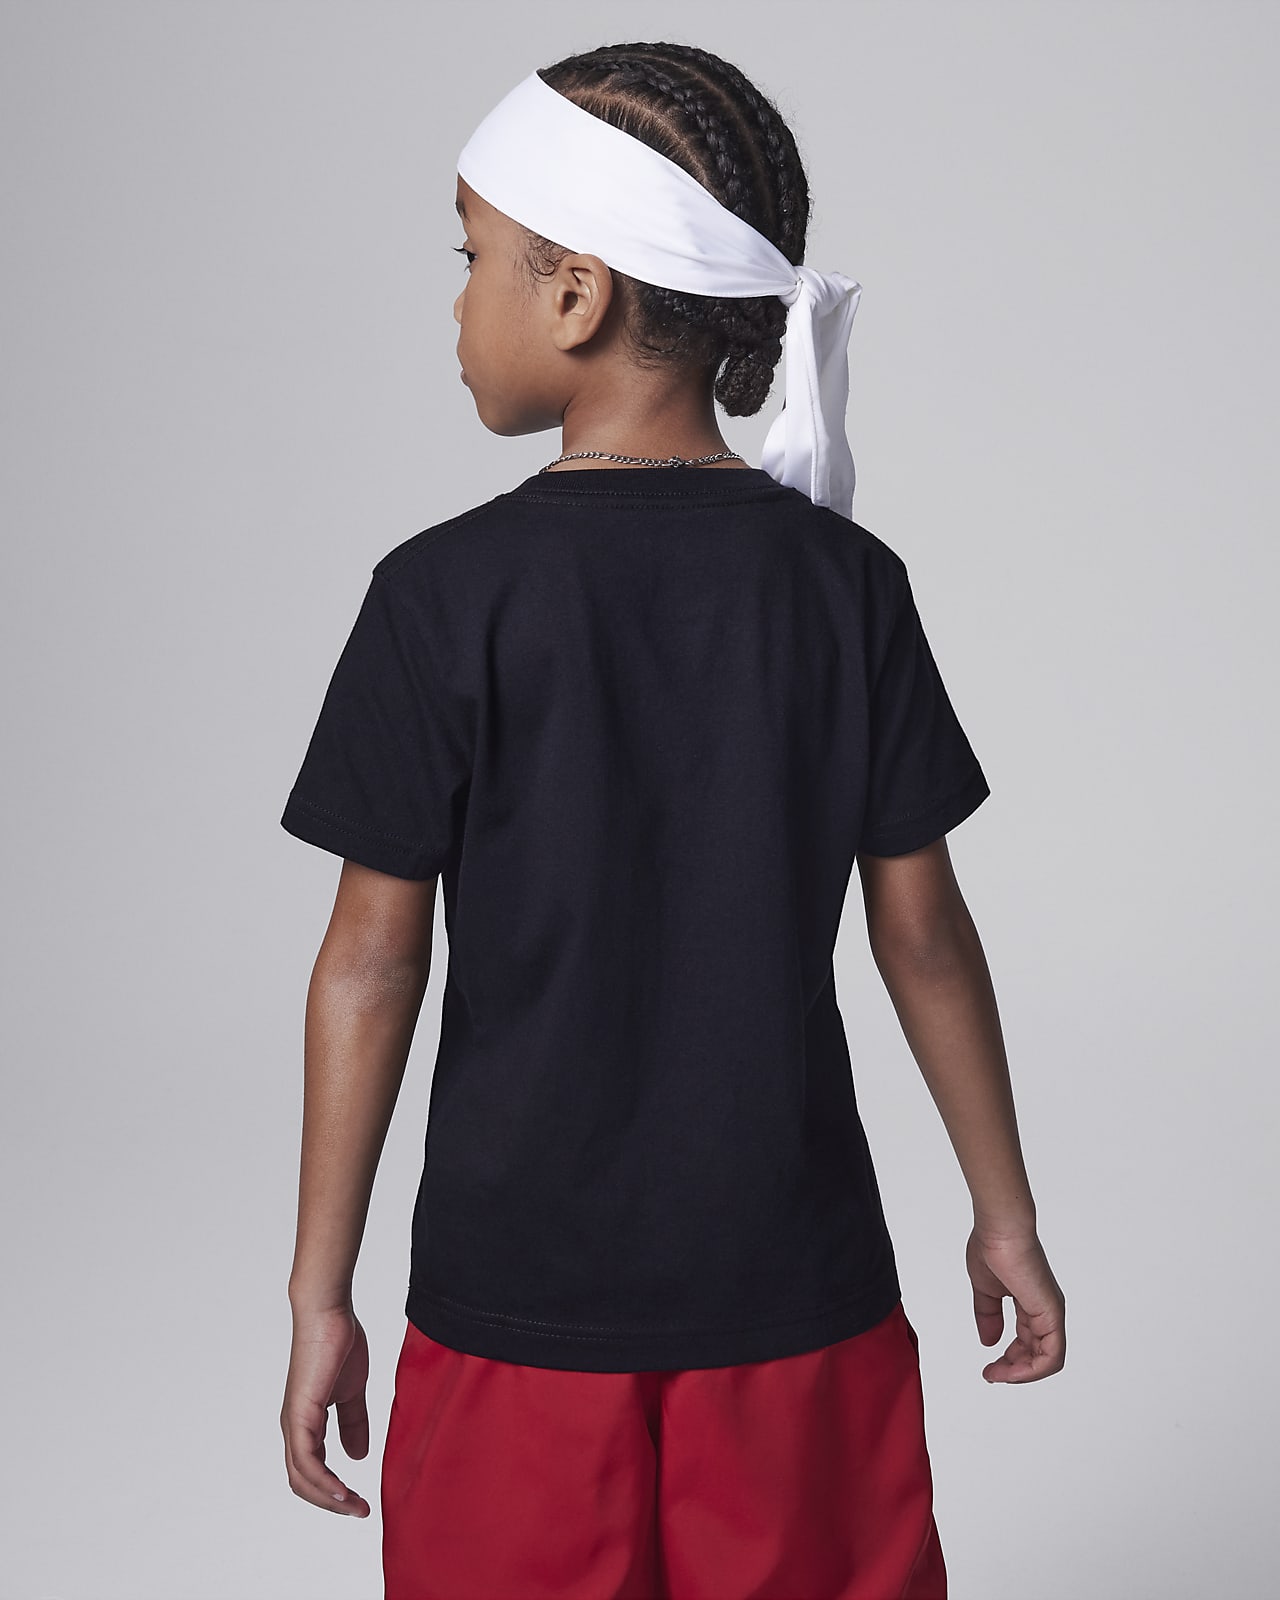 Camiseta de niños Varisty Jumpman Jordan